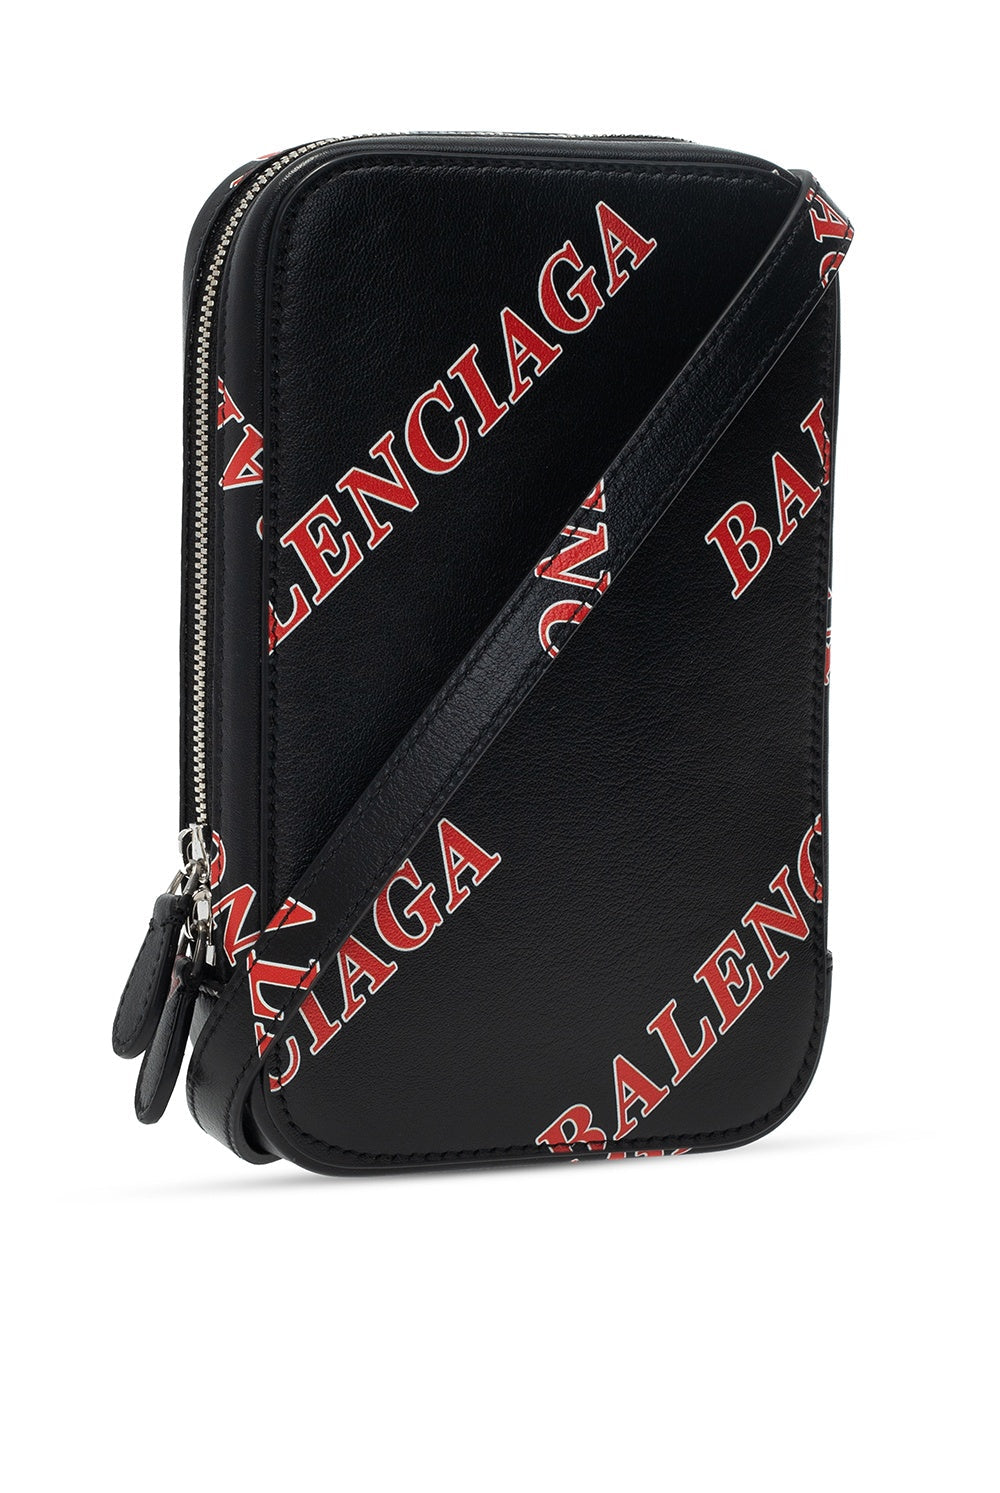 Balenciaga Black Calfskin Leather Sport Print Phone Holder Bag - LUXURYMRKT